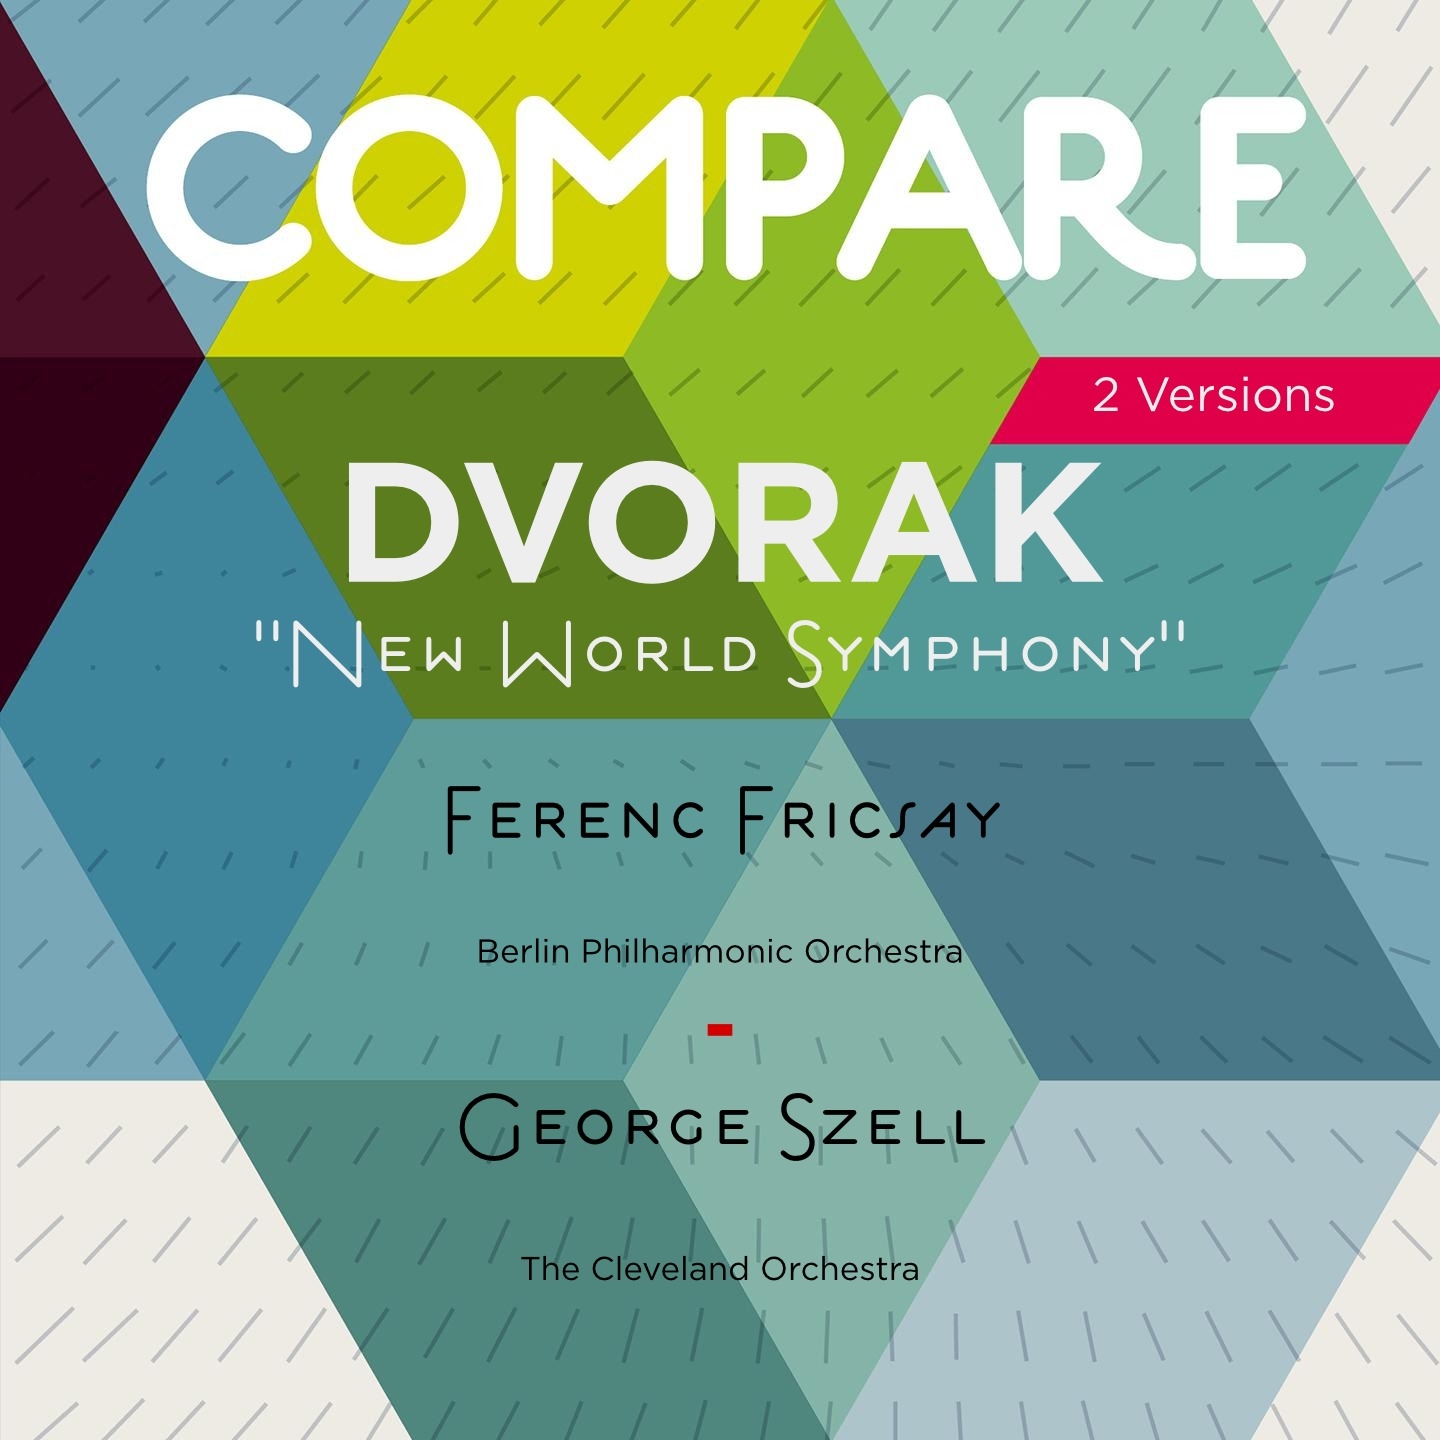 Dvoa k: New World Symphony, Ferenc Fricsay vs. George Szell